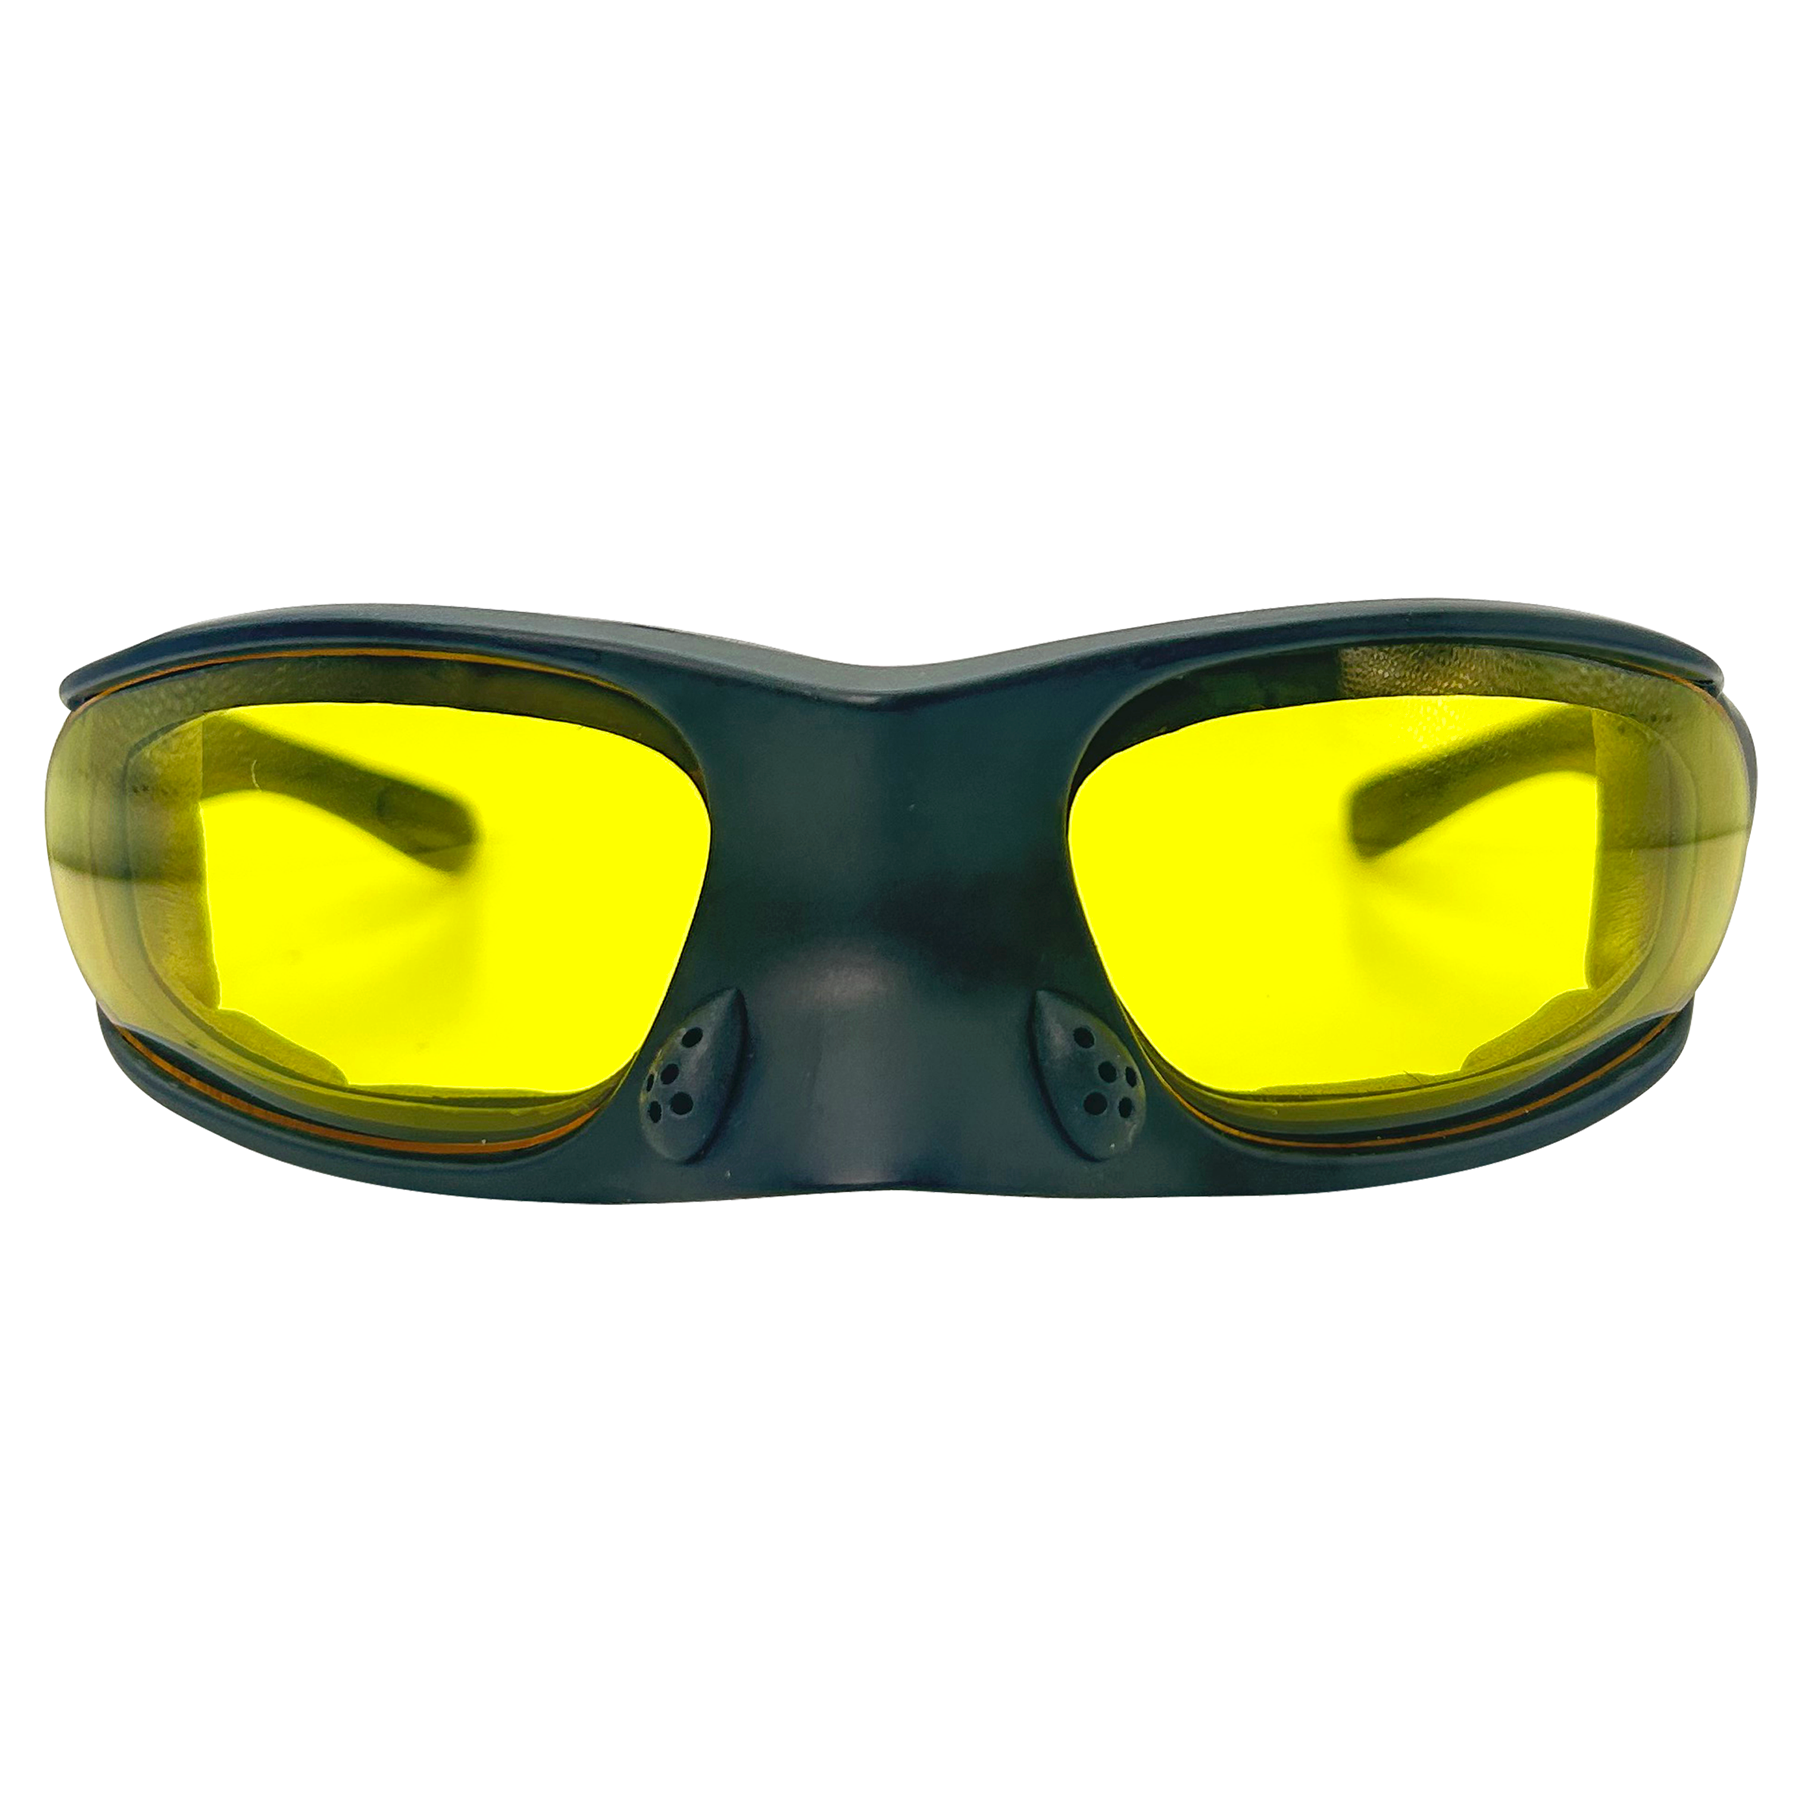 yellowflash lens sunglasses